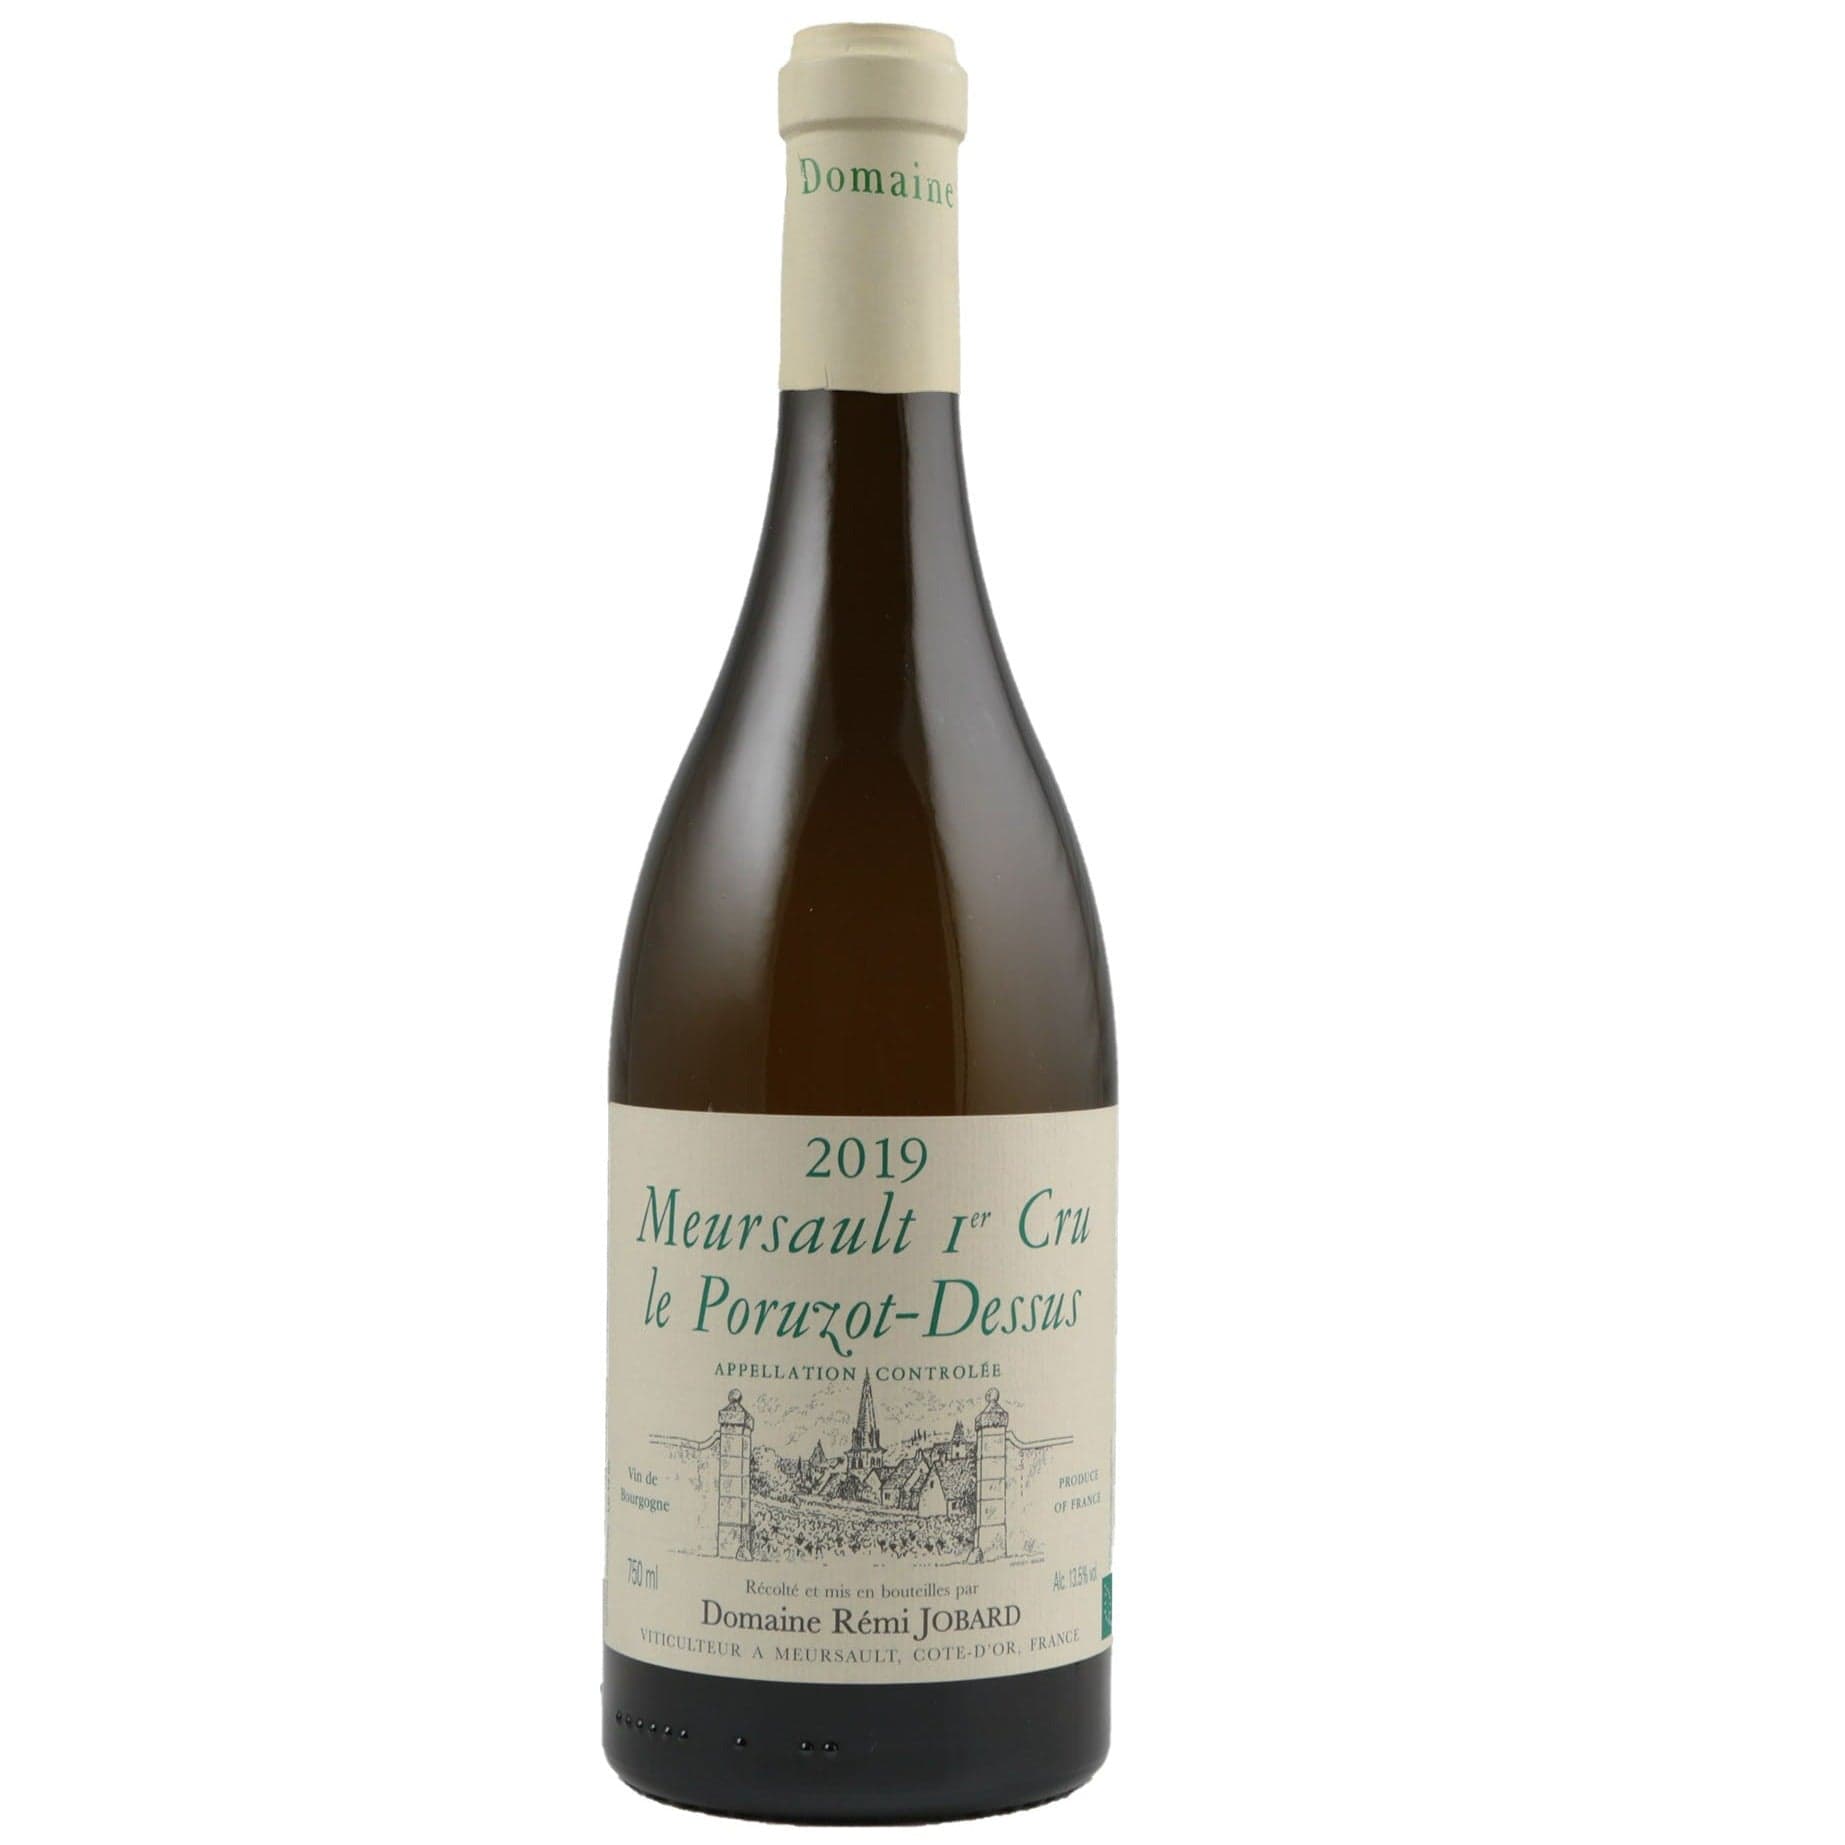 Single bottle of White wine Dom. Remi Jobard, Le Poruzots Dessus Premier Cru, Meursault, 2019 100% Chardonnay